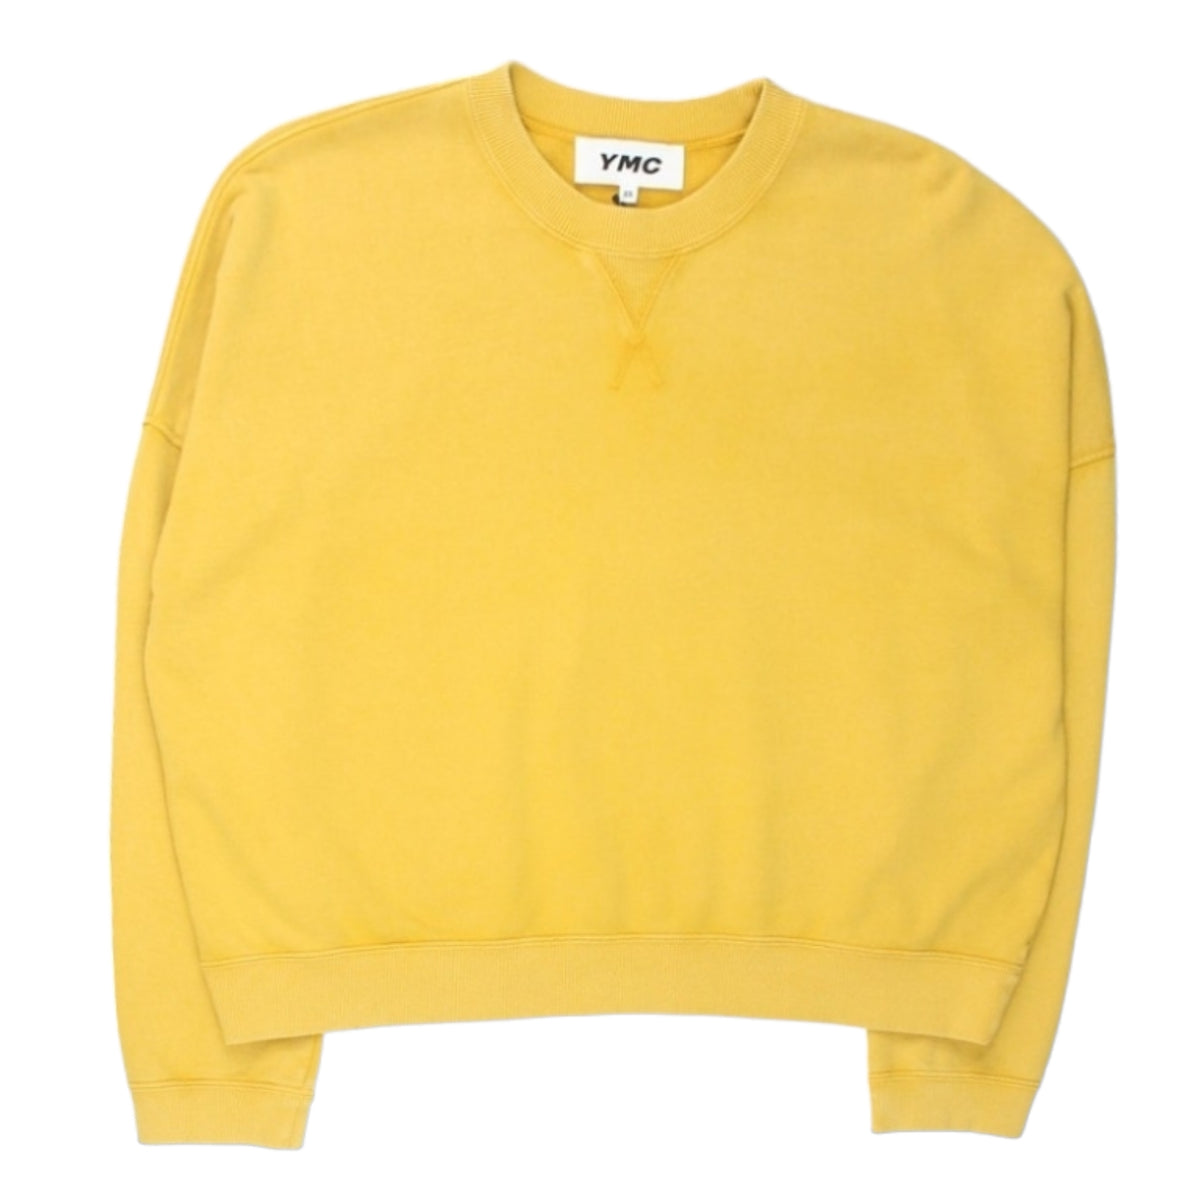 YMC Yellow Almost Grown Sweatshirt